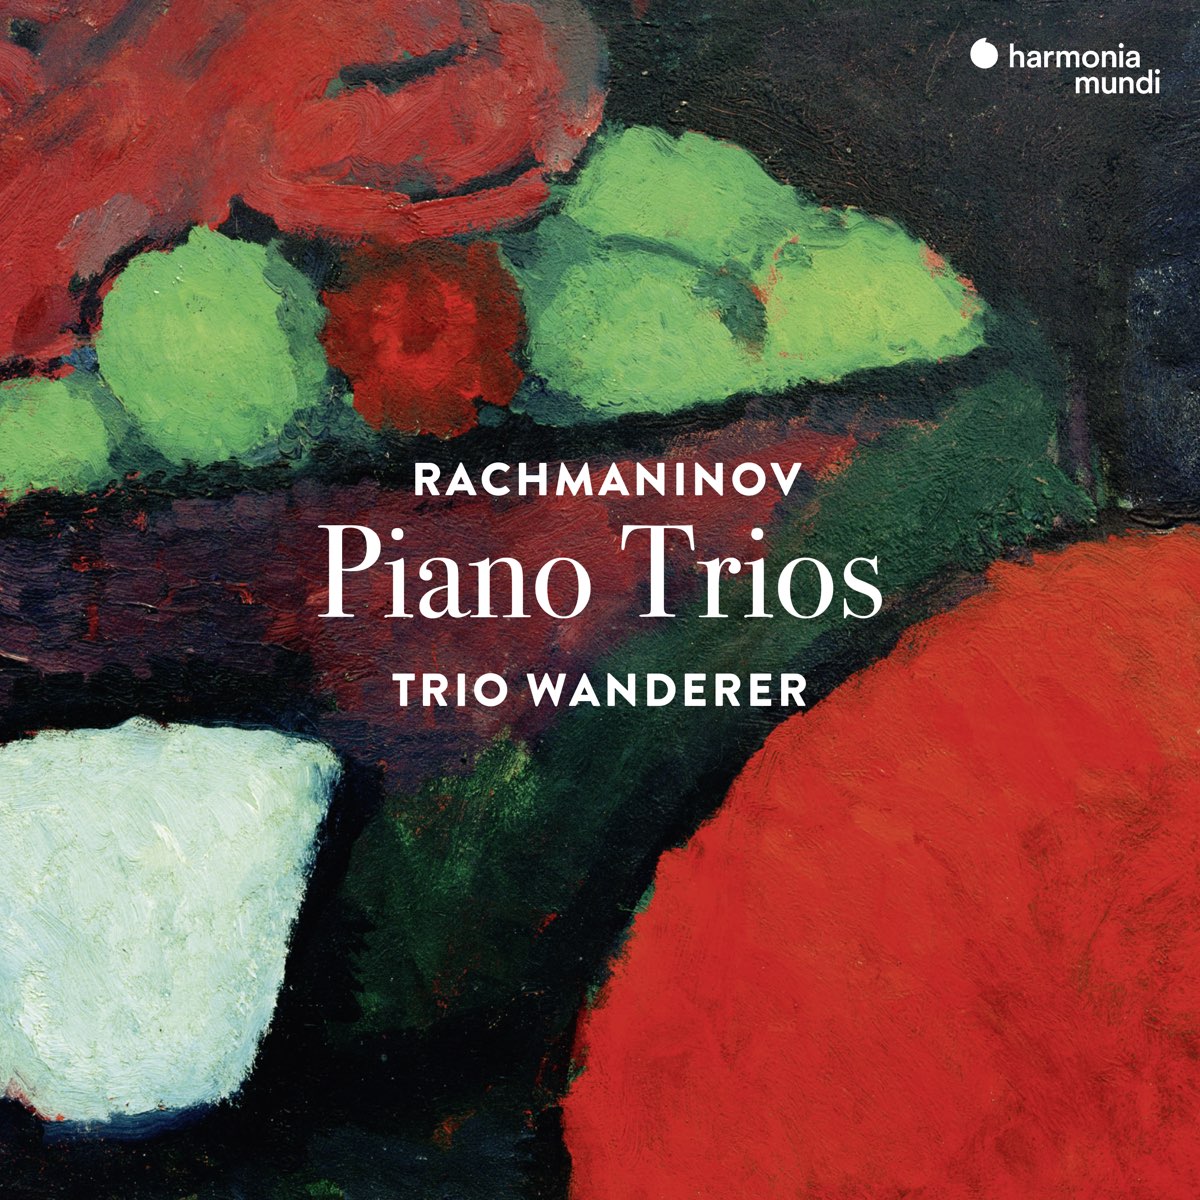 Rachmaninov: Piano Trios by Trio Wanderer on Apple Music